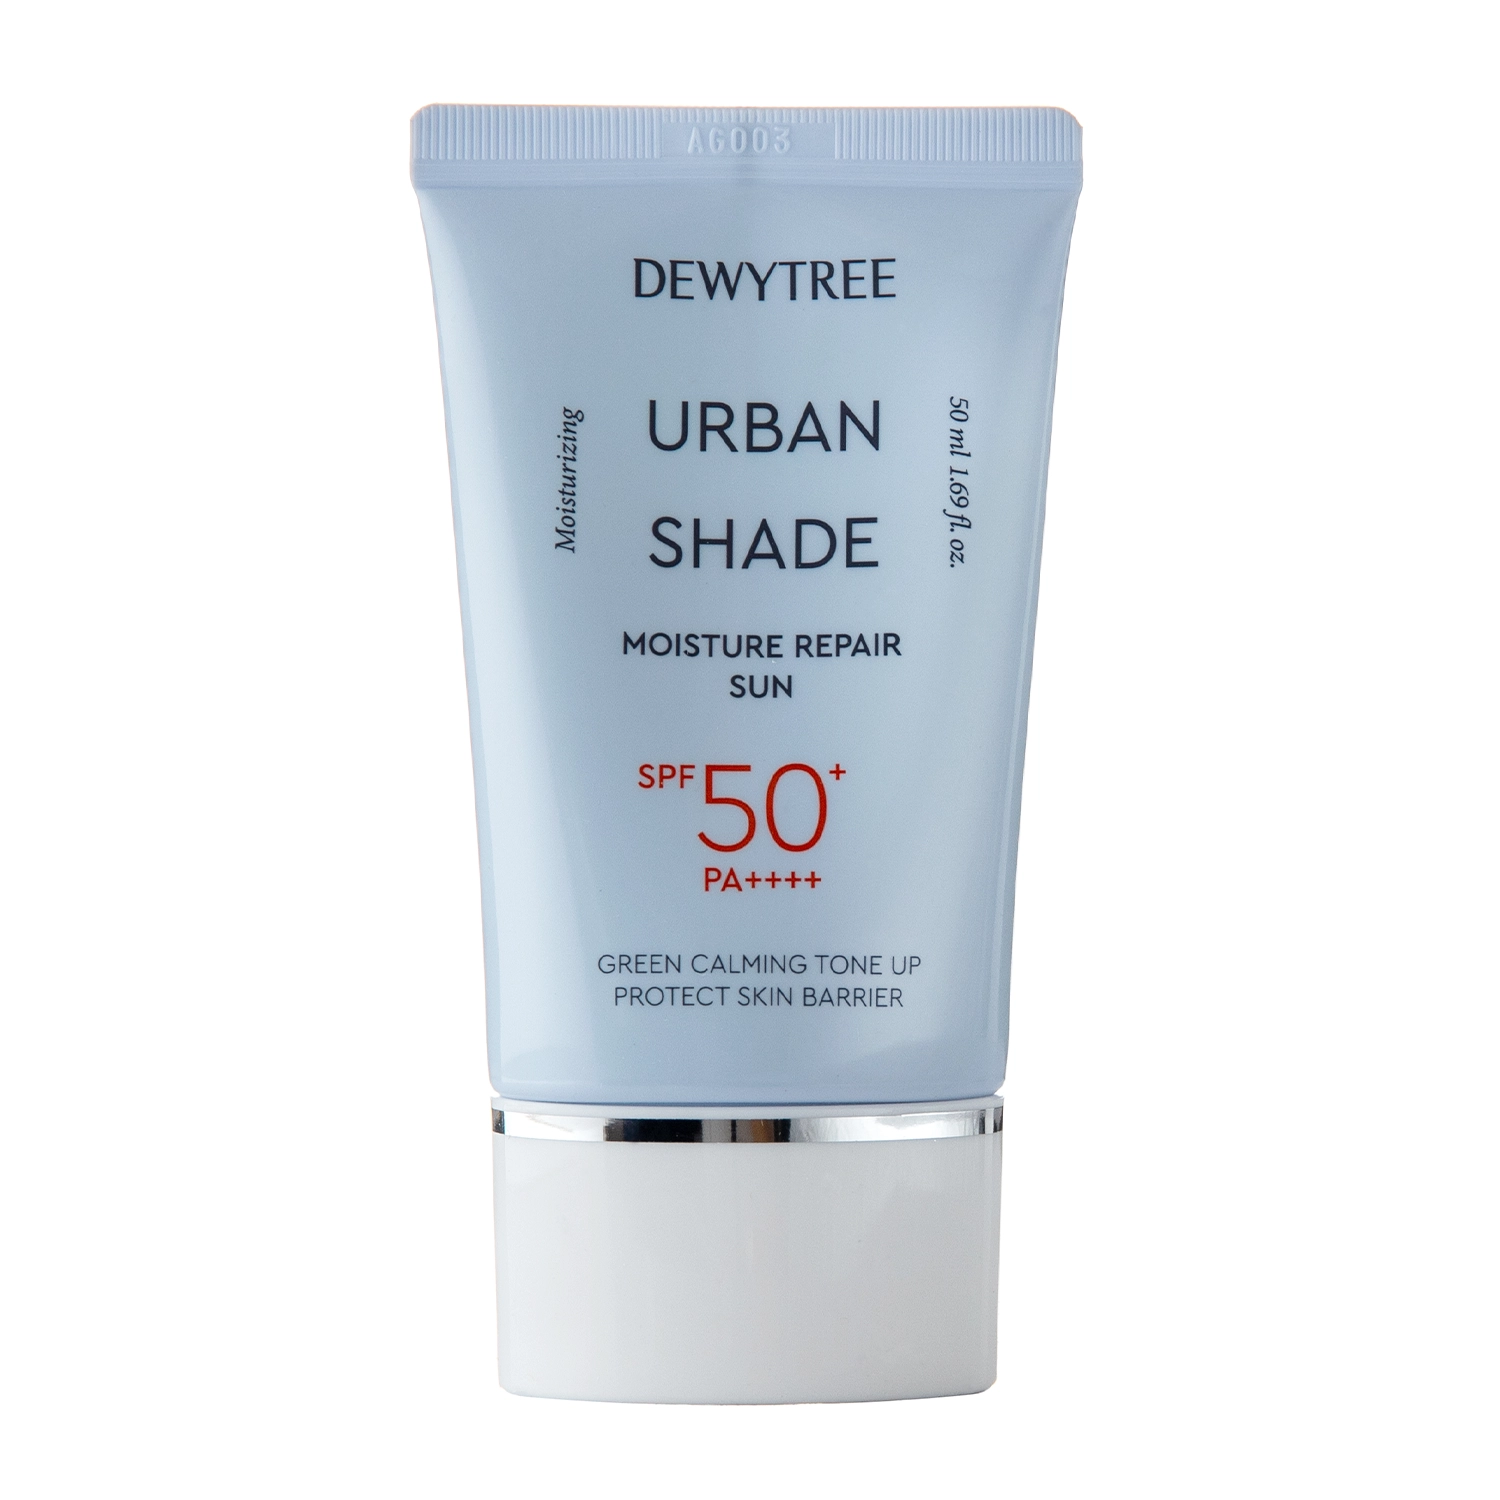 Dewytree - Urban Shade Moisture Repair Sun SPF 50+/PA++++ - Увлажняющий солнцезащитный крем со смешанными фильтрами - 50ml